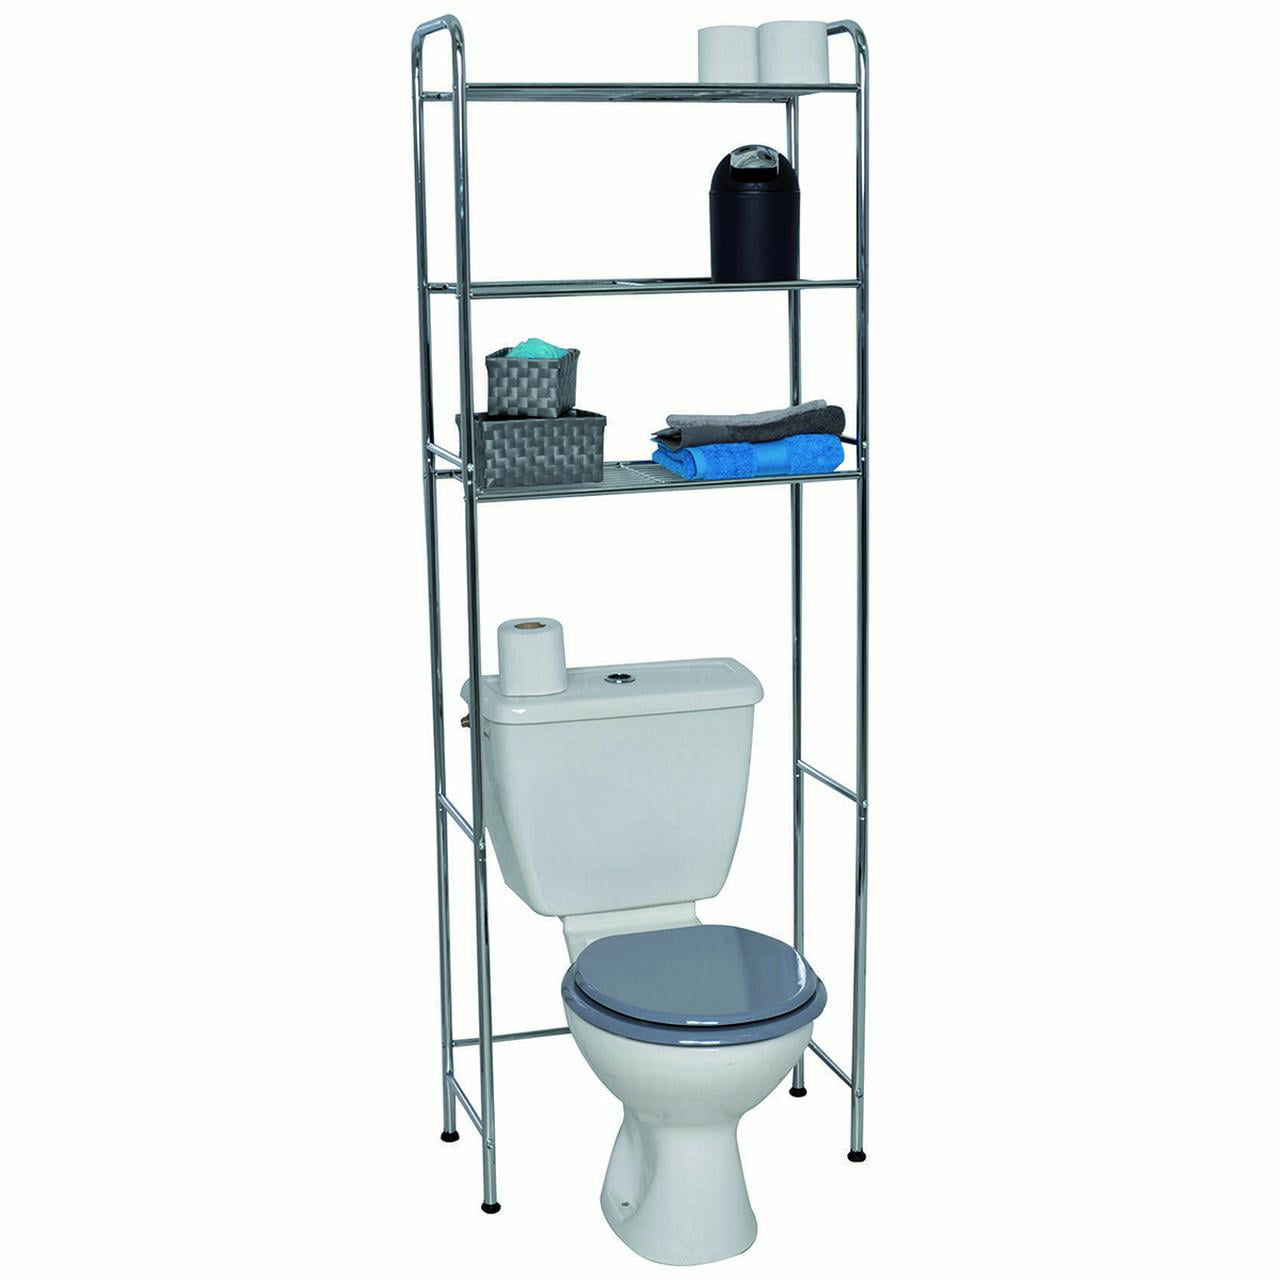 3Tier Space Saver Toilet Free Standing Metal Over the Toilet Storage Toilet Shelf, Washing